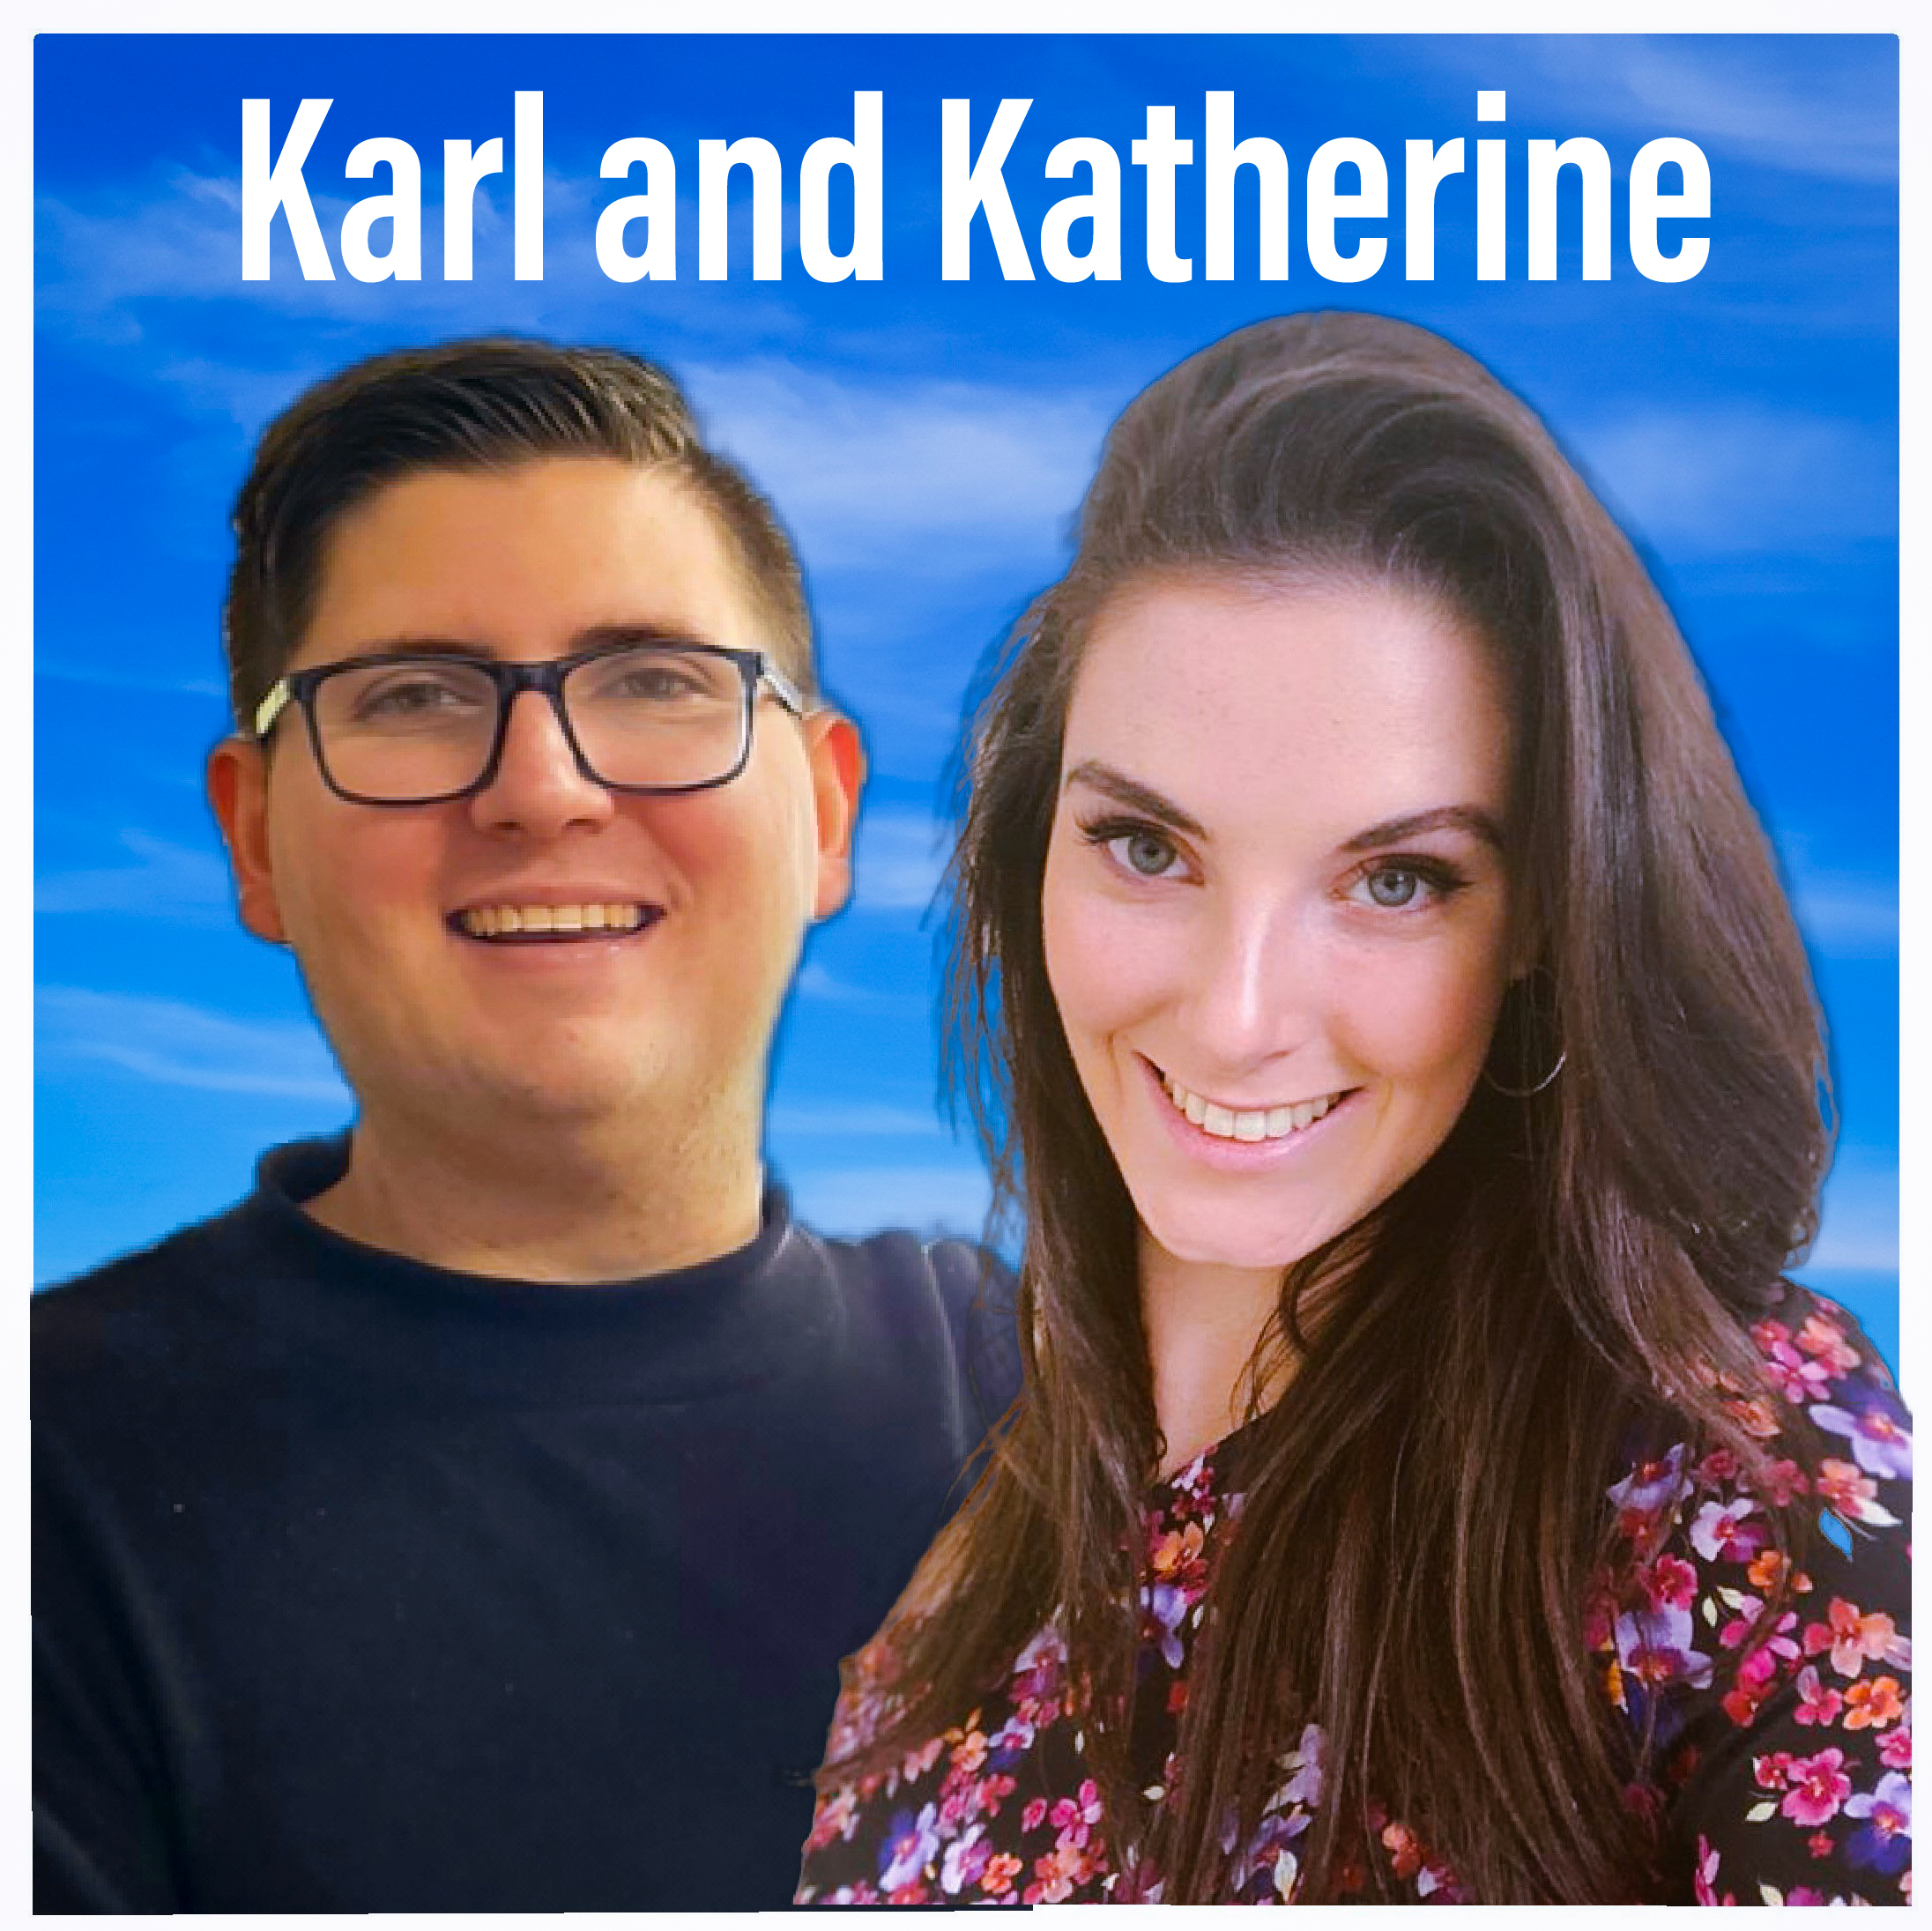 Karl and Katherine - Monday 9th November 2020